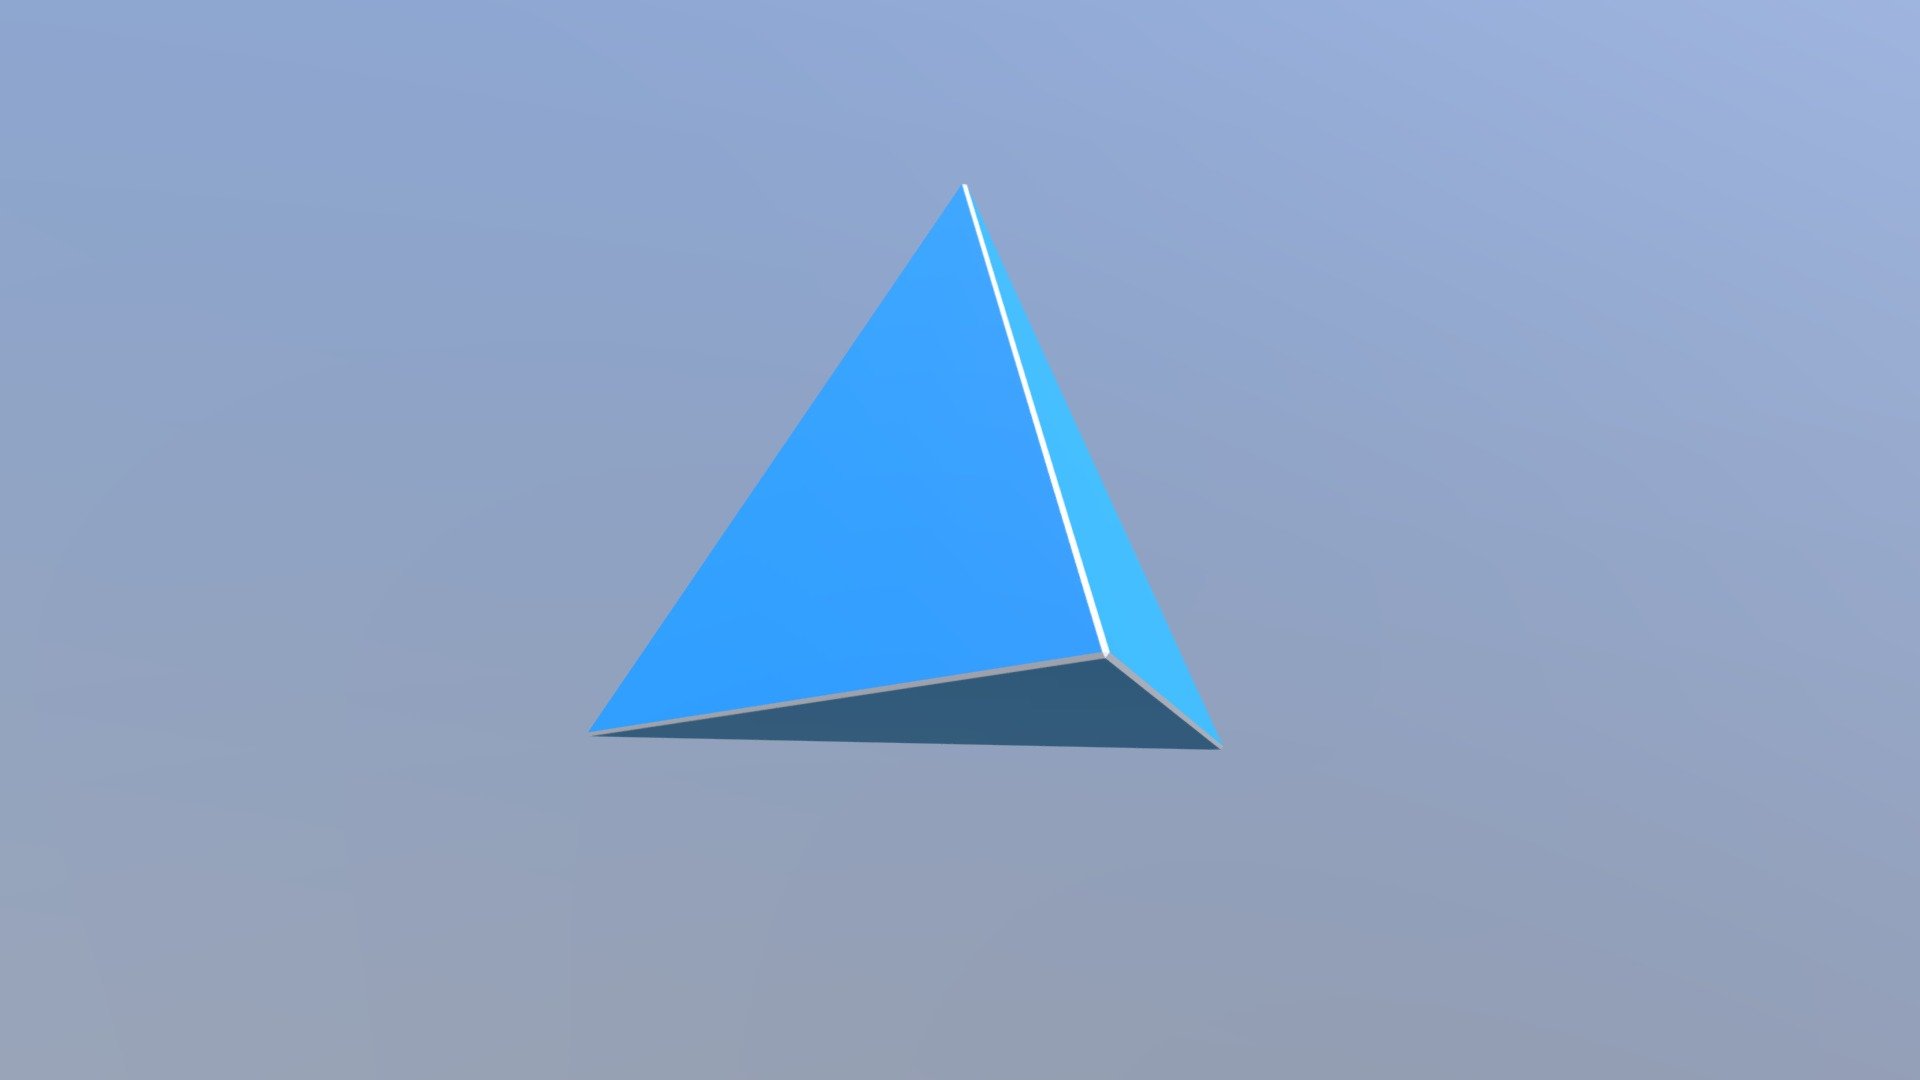 Regular Triangular Based Pyramid 3D model by